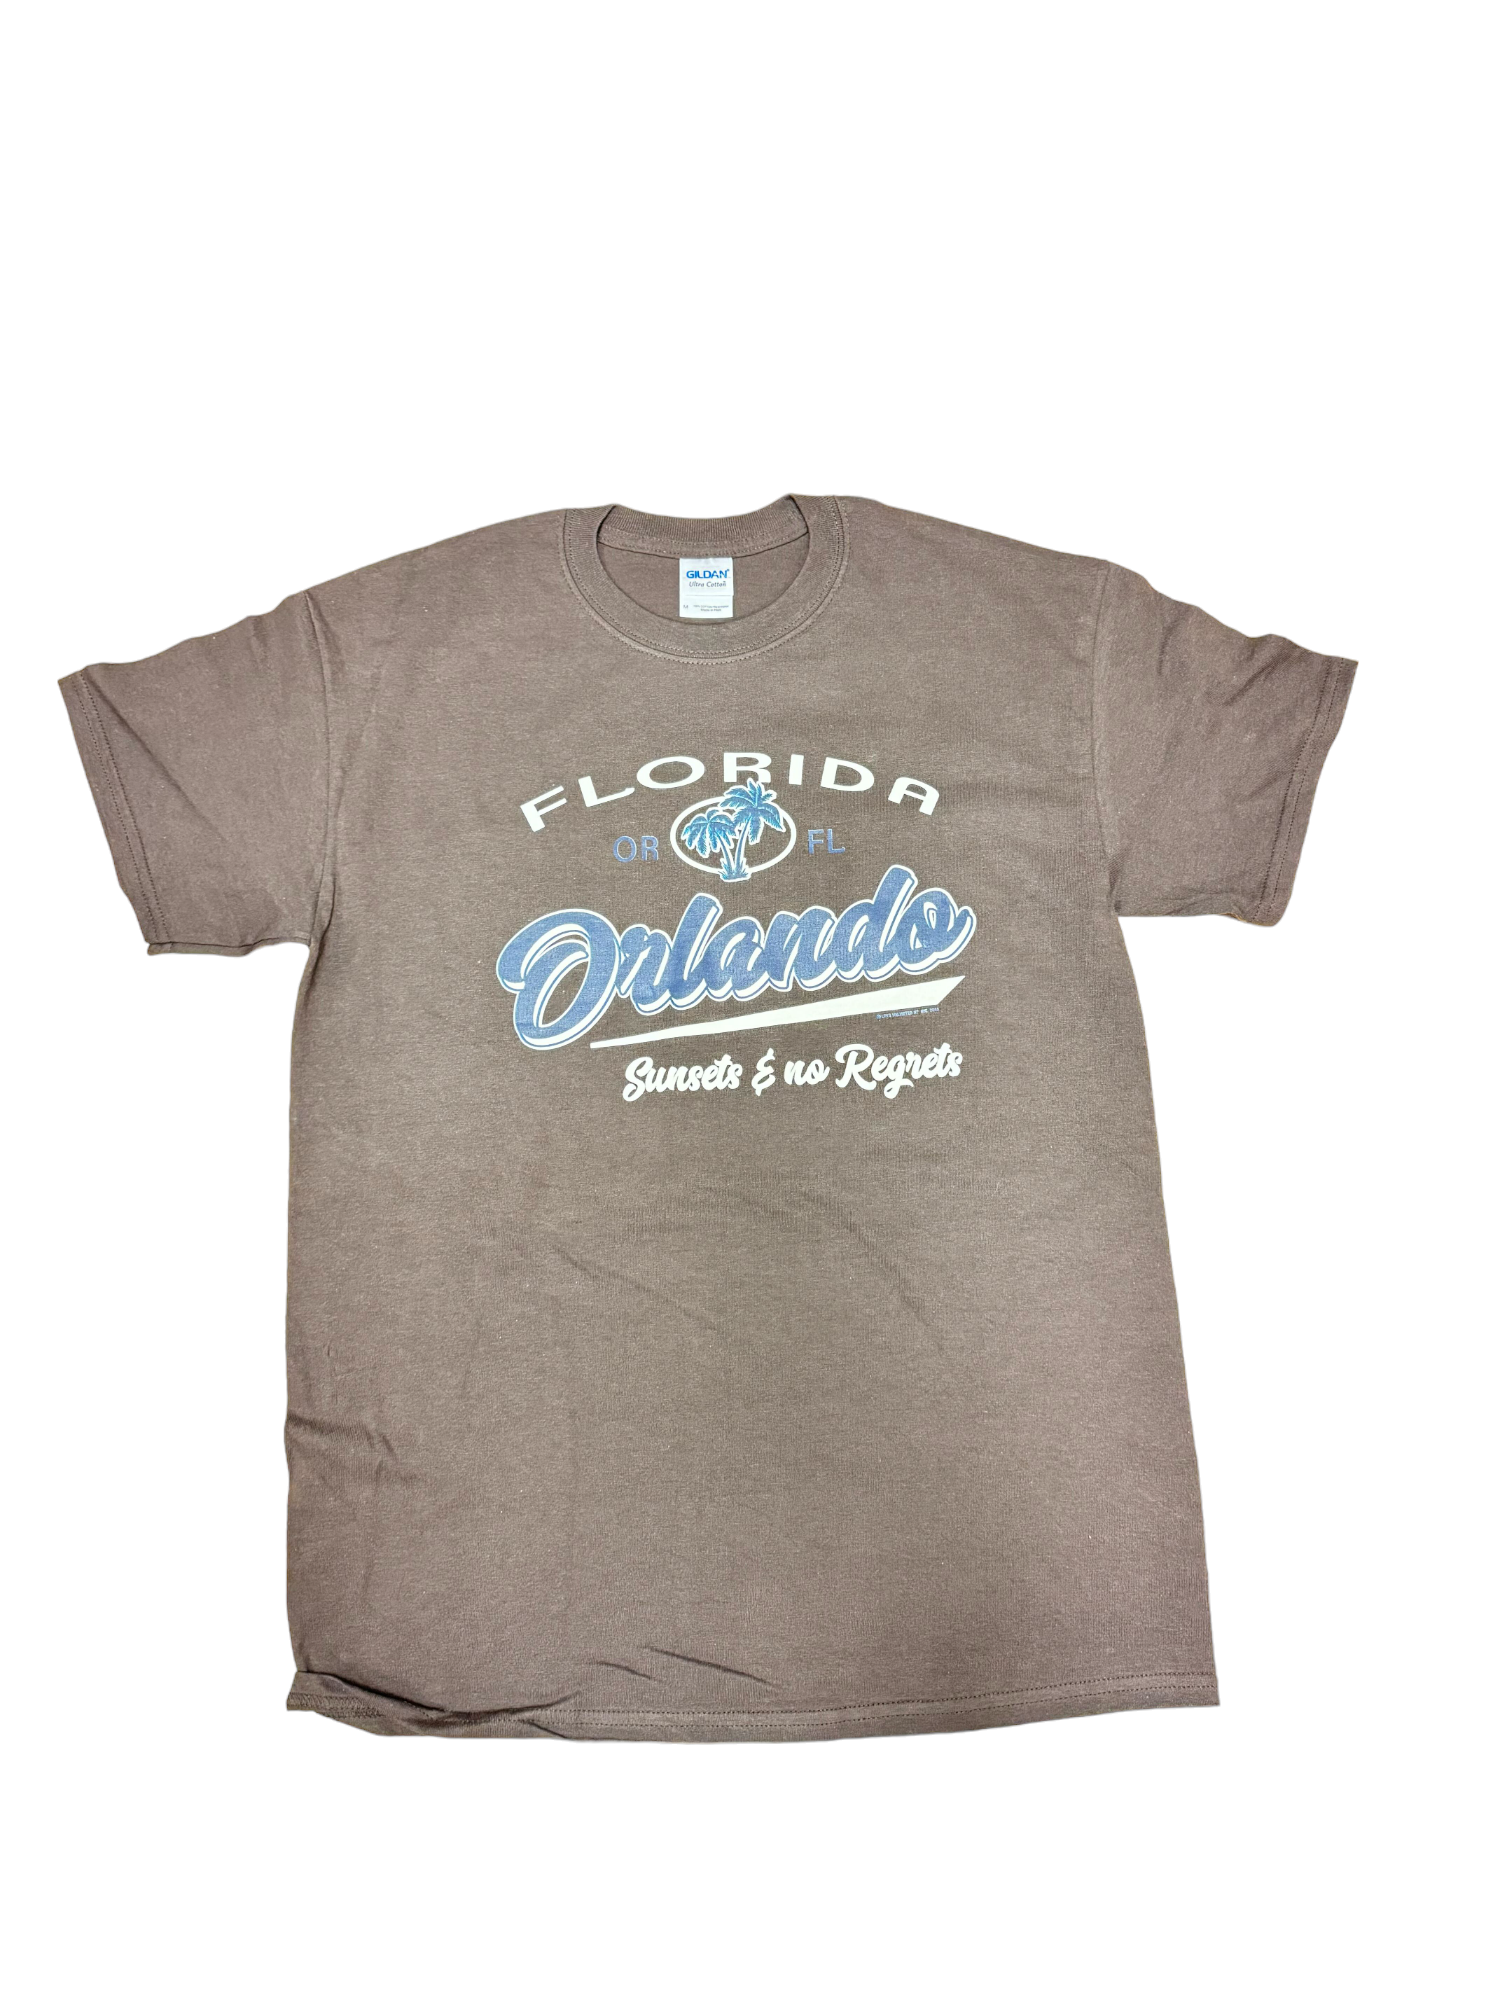 Brown and Blue Florida Orlando Palm Tree Shirt